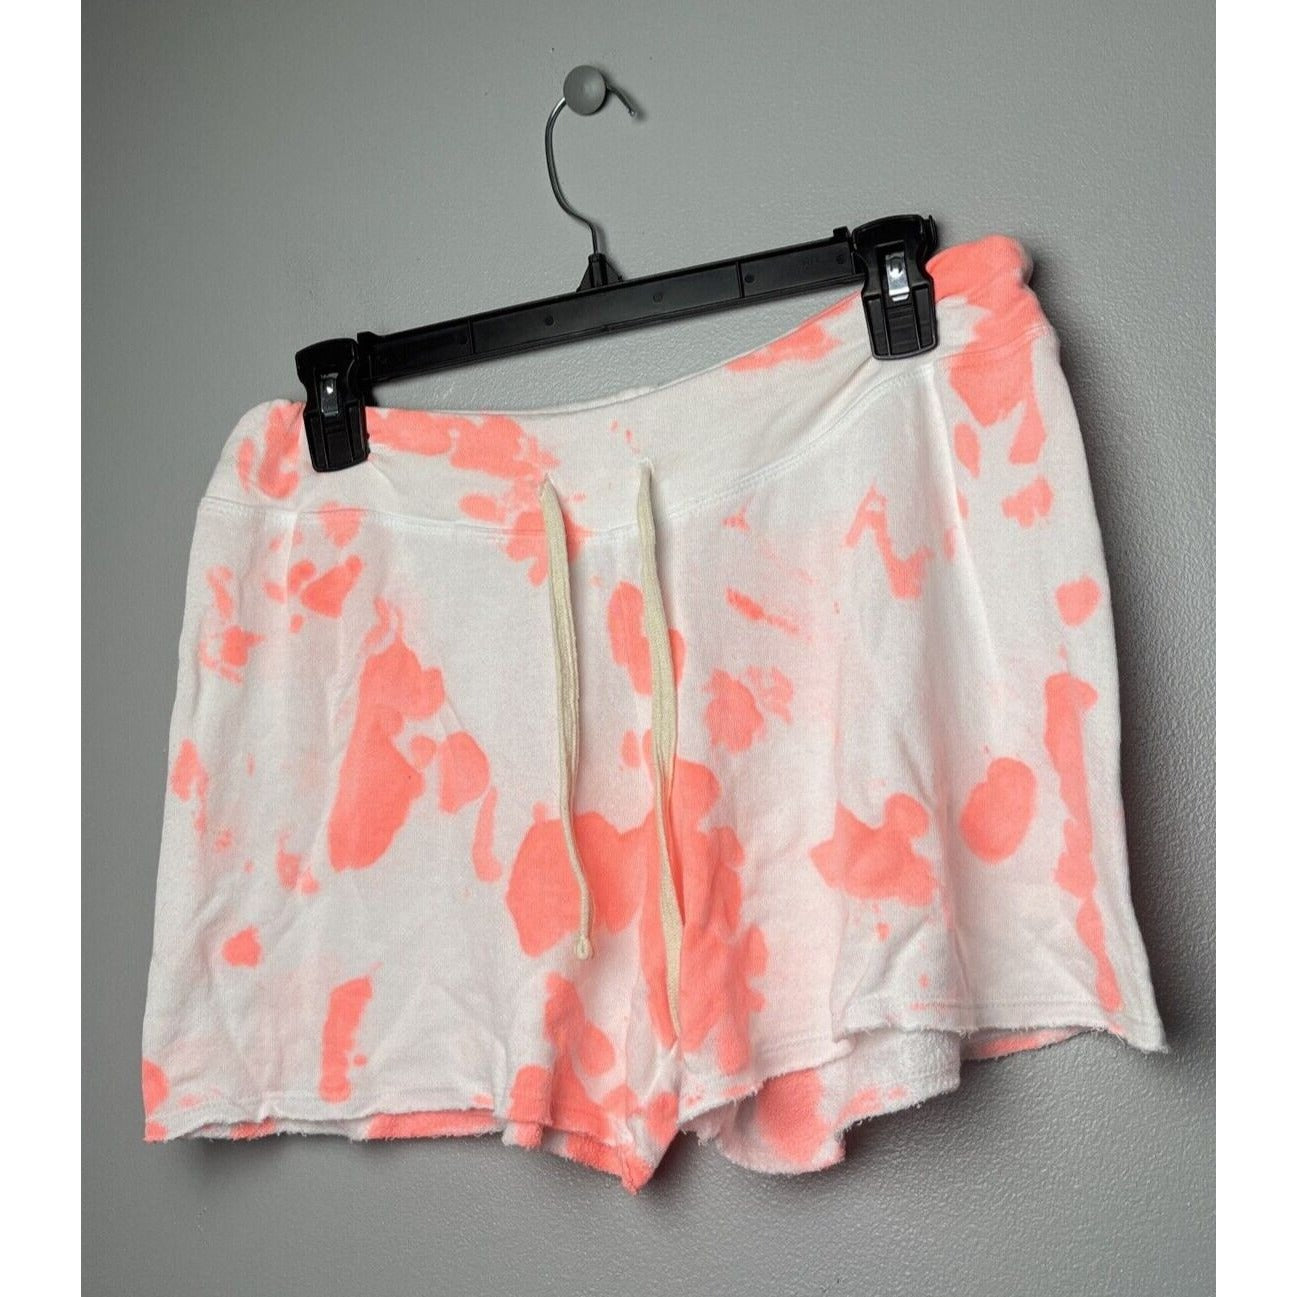 Sundry Women's Drawstring Cutoff Shorts Tie Dye Pop Peach Size 1 Small